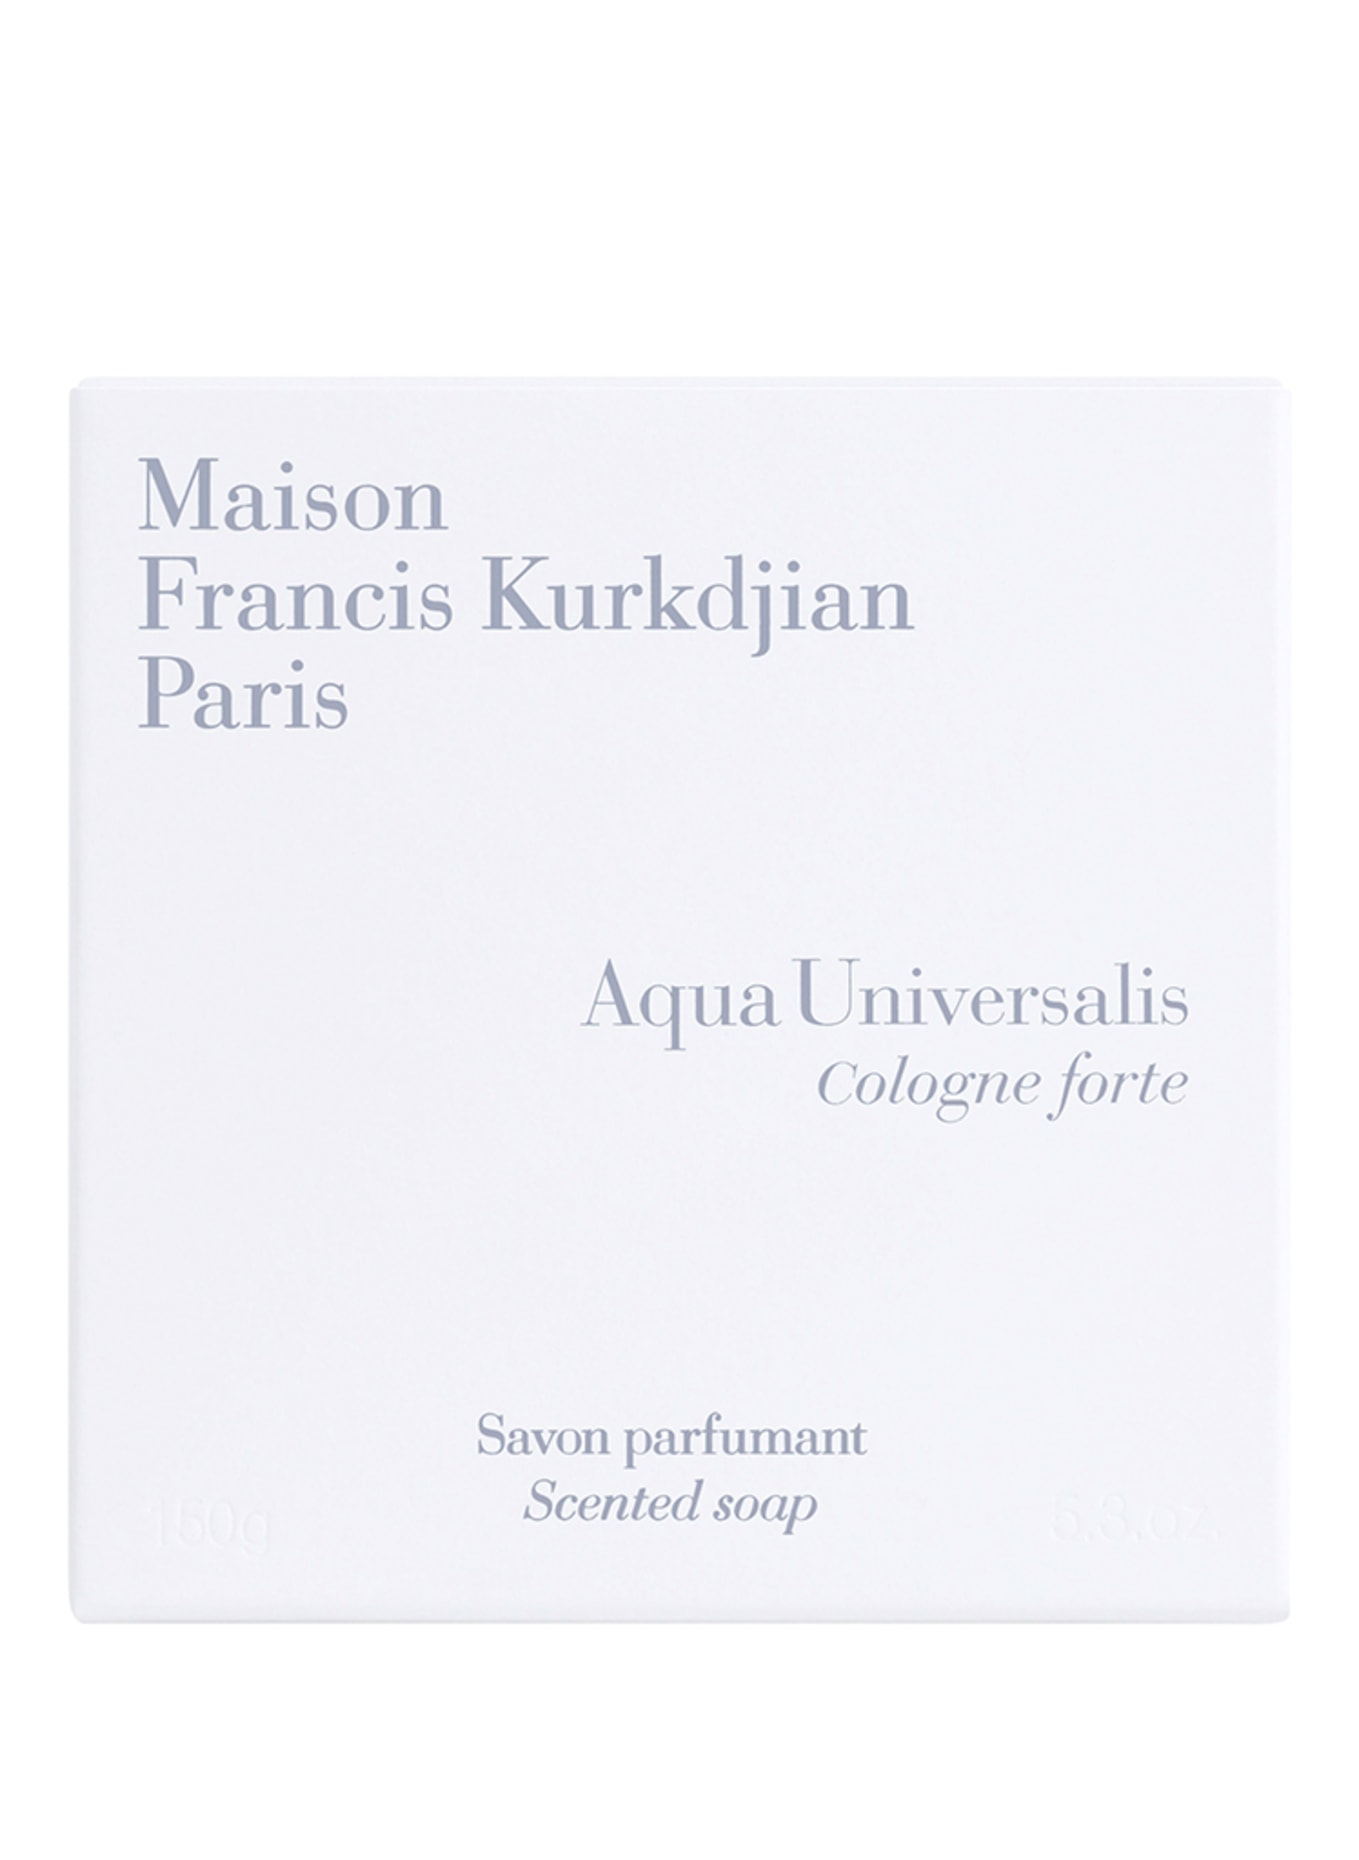 Maison Francis Kurkdjian Paris AQUA UNIVERSALIS COLOGNE FORTE (Obrázek 2)